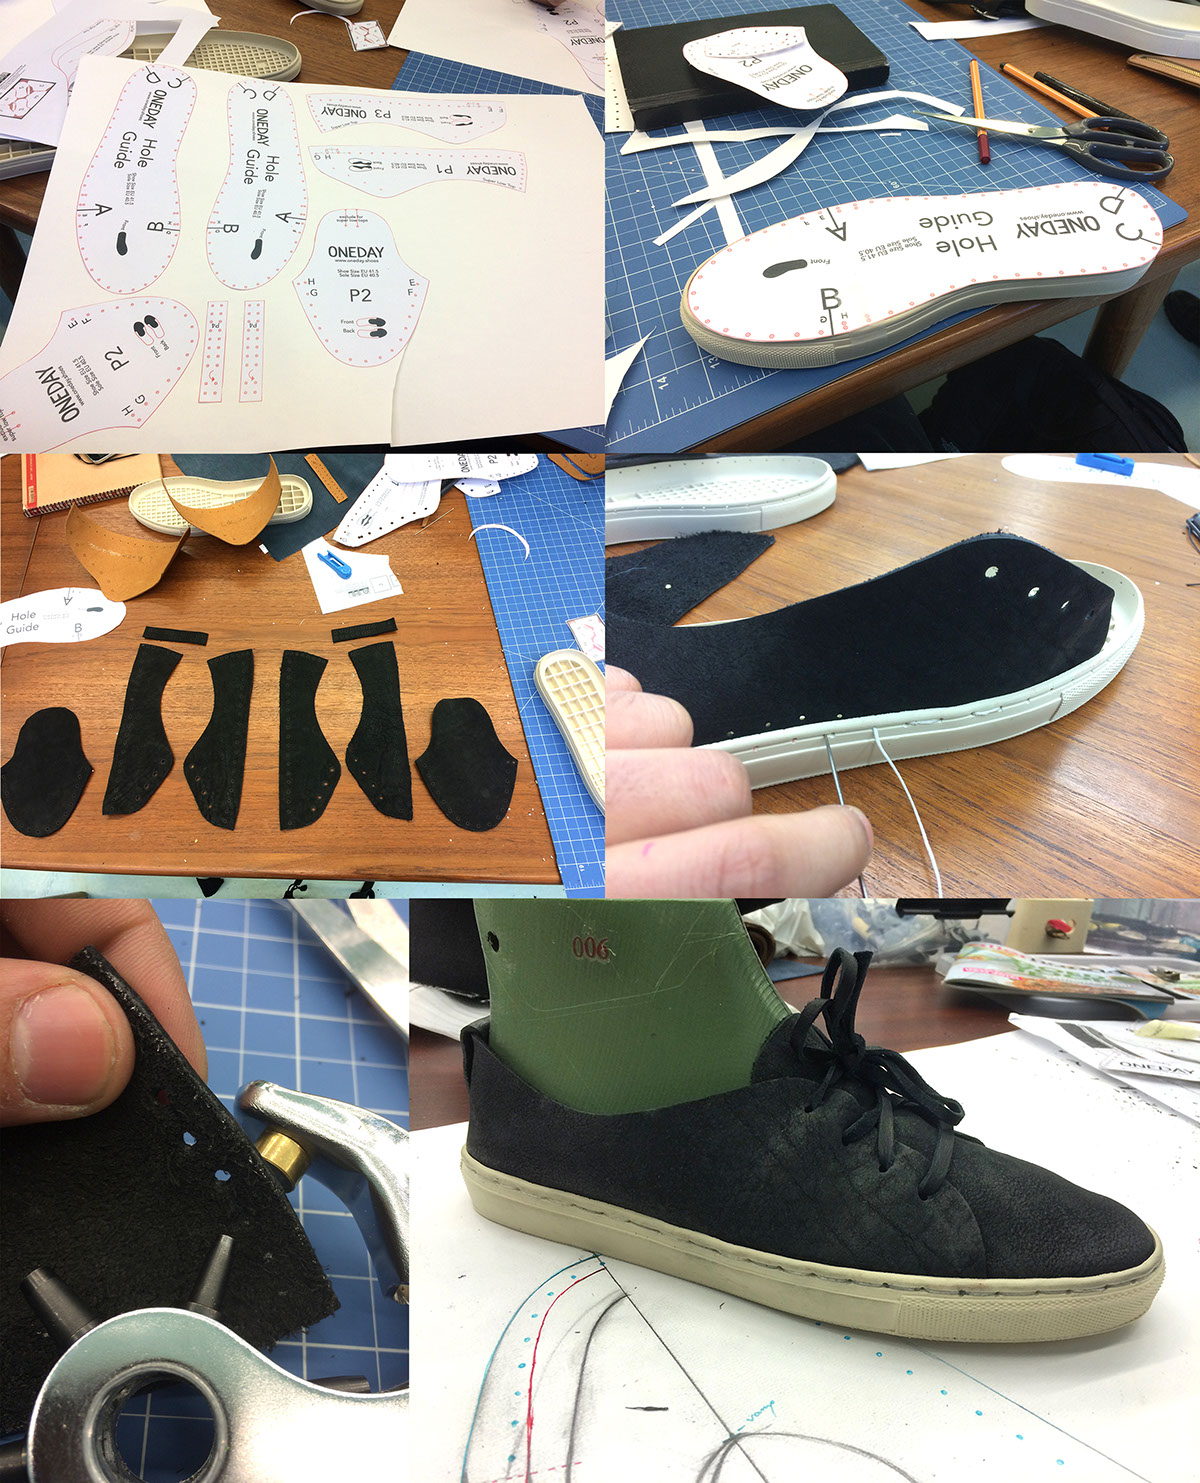 shoemaking sneakers industrialdesign risd germany Europe slem Stahl shoes leather handmade Prototyping